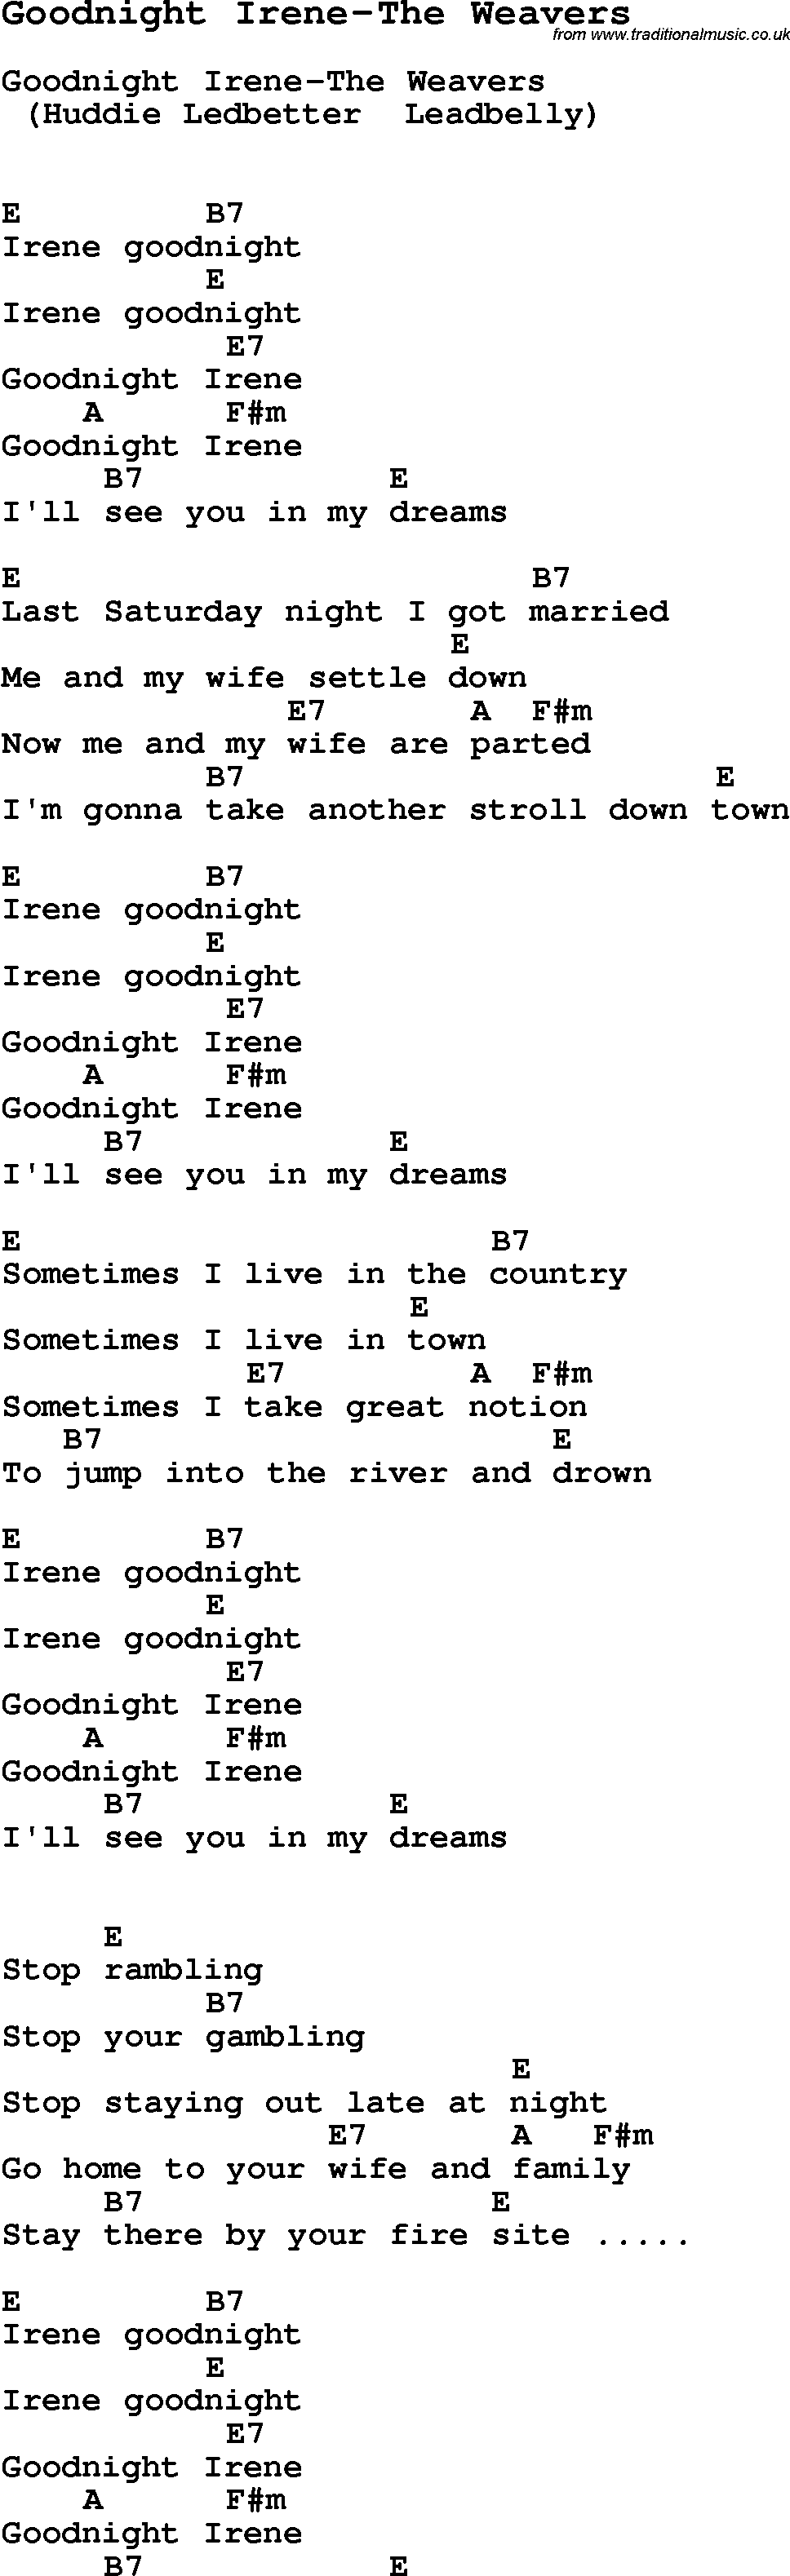 Summer-Camp Song, Goodnight Irene-The Weavers, with lyrics and chords for Ukulele, Guitar Banjo etc.